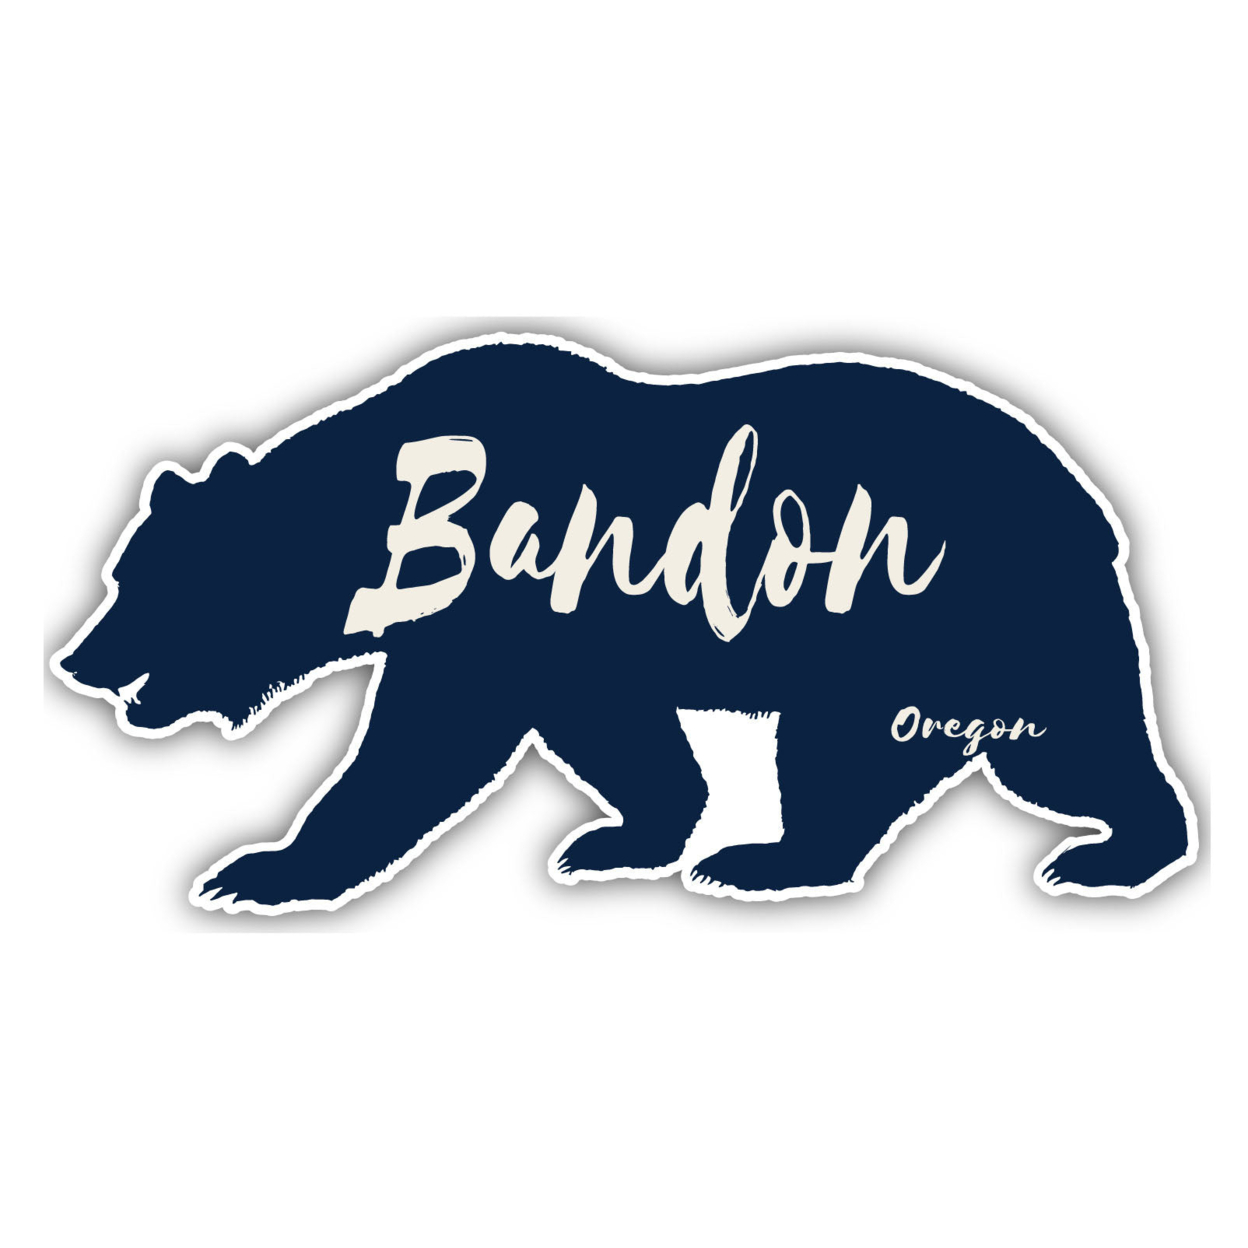 Bandon Oregon Souvenir Decorative Stickers (Choose Theme And Size) - Single Unit, 4-Inch, Camp Life